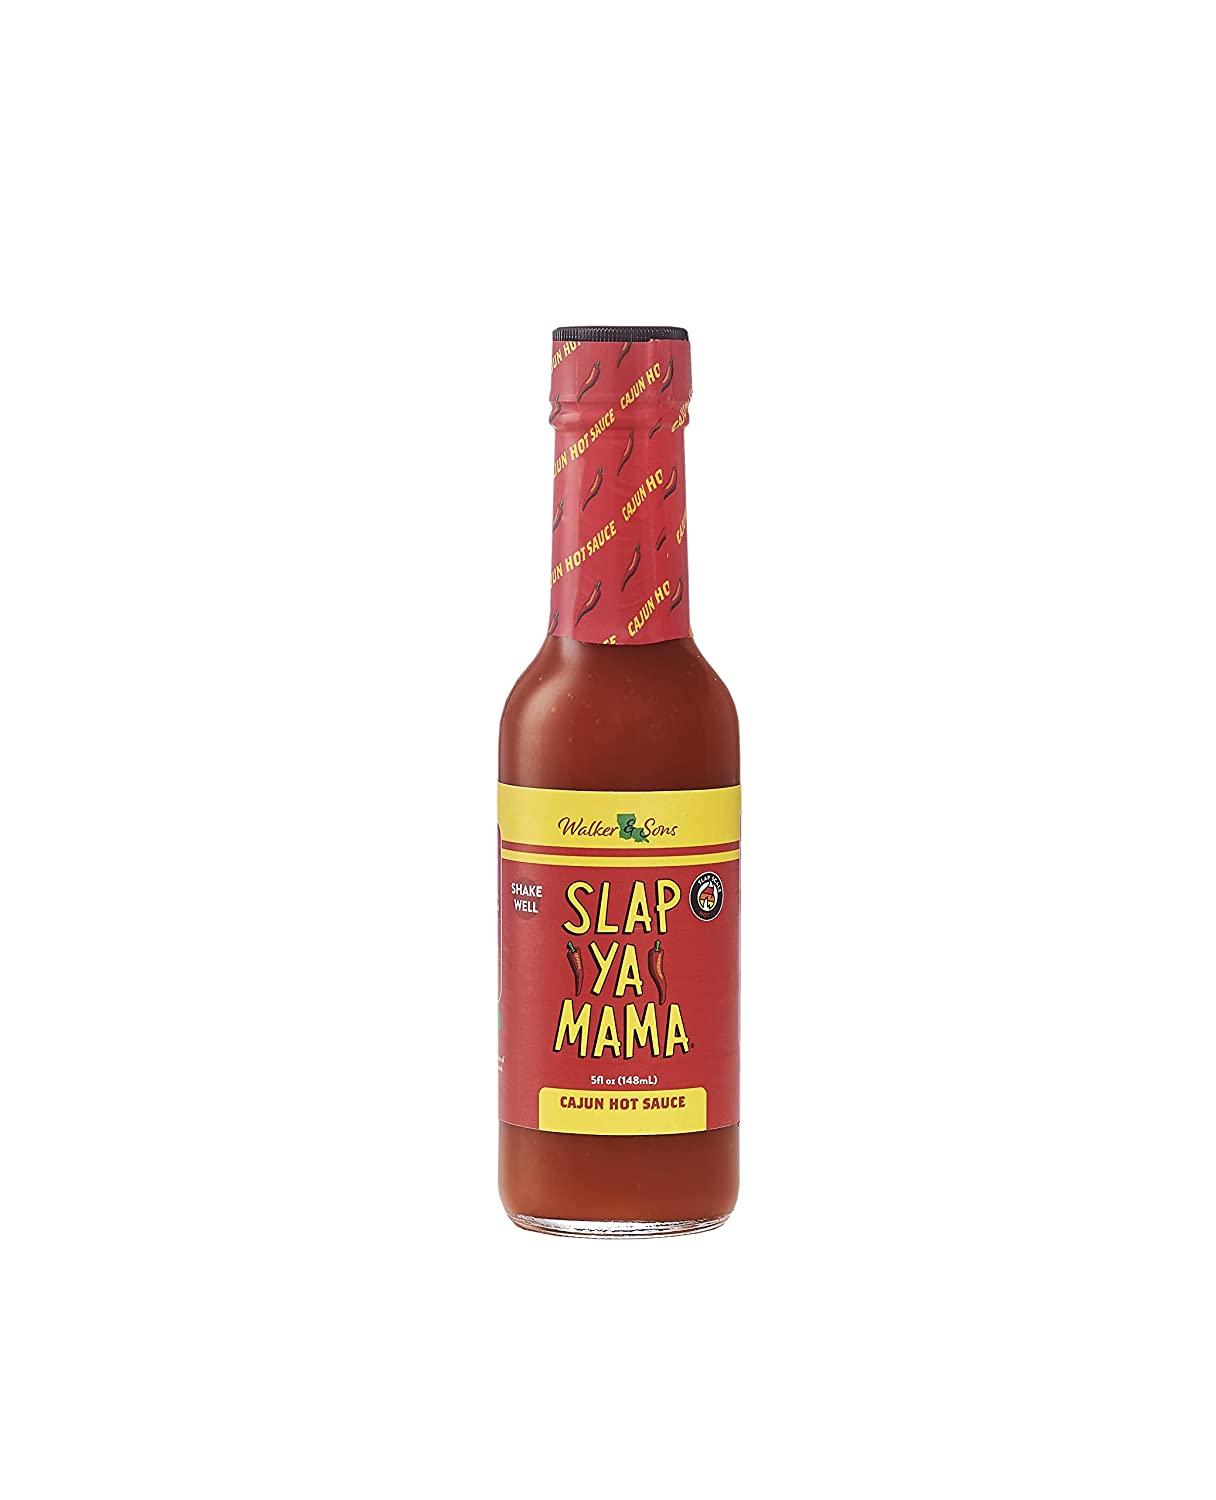  Slap Ya Mama - Low Sodium Cajun Seasoning - 6 oz. Three Cans :  Grocery & Gourmet Food